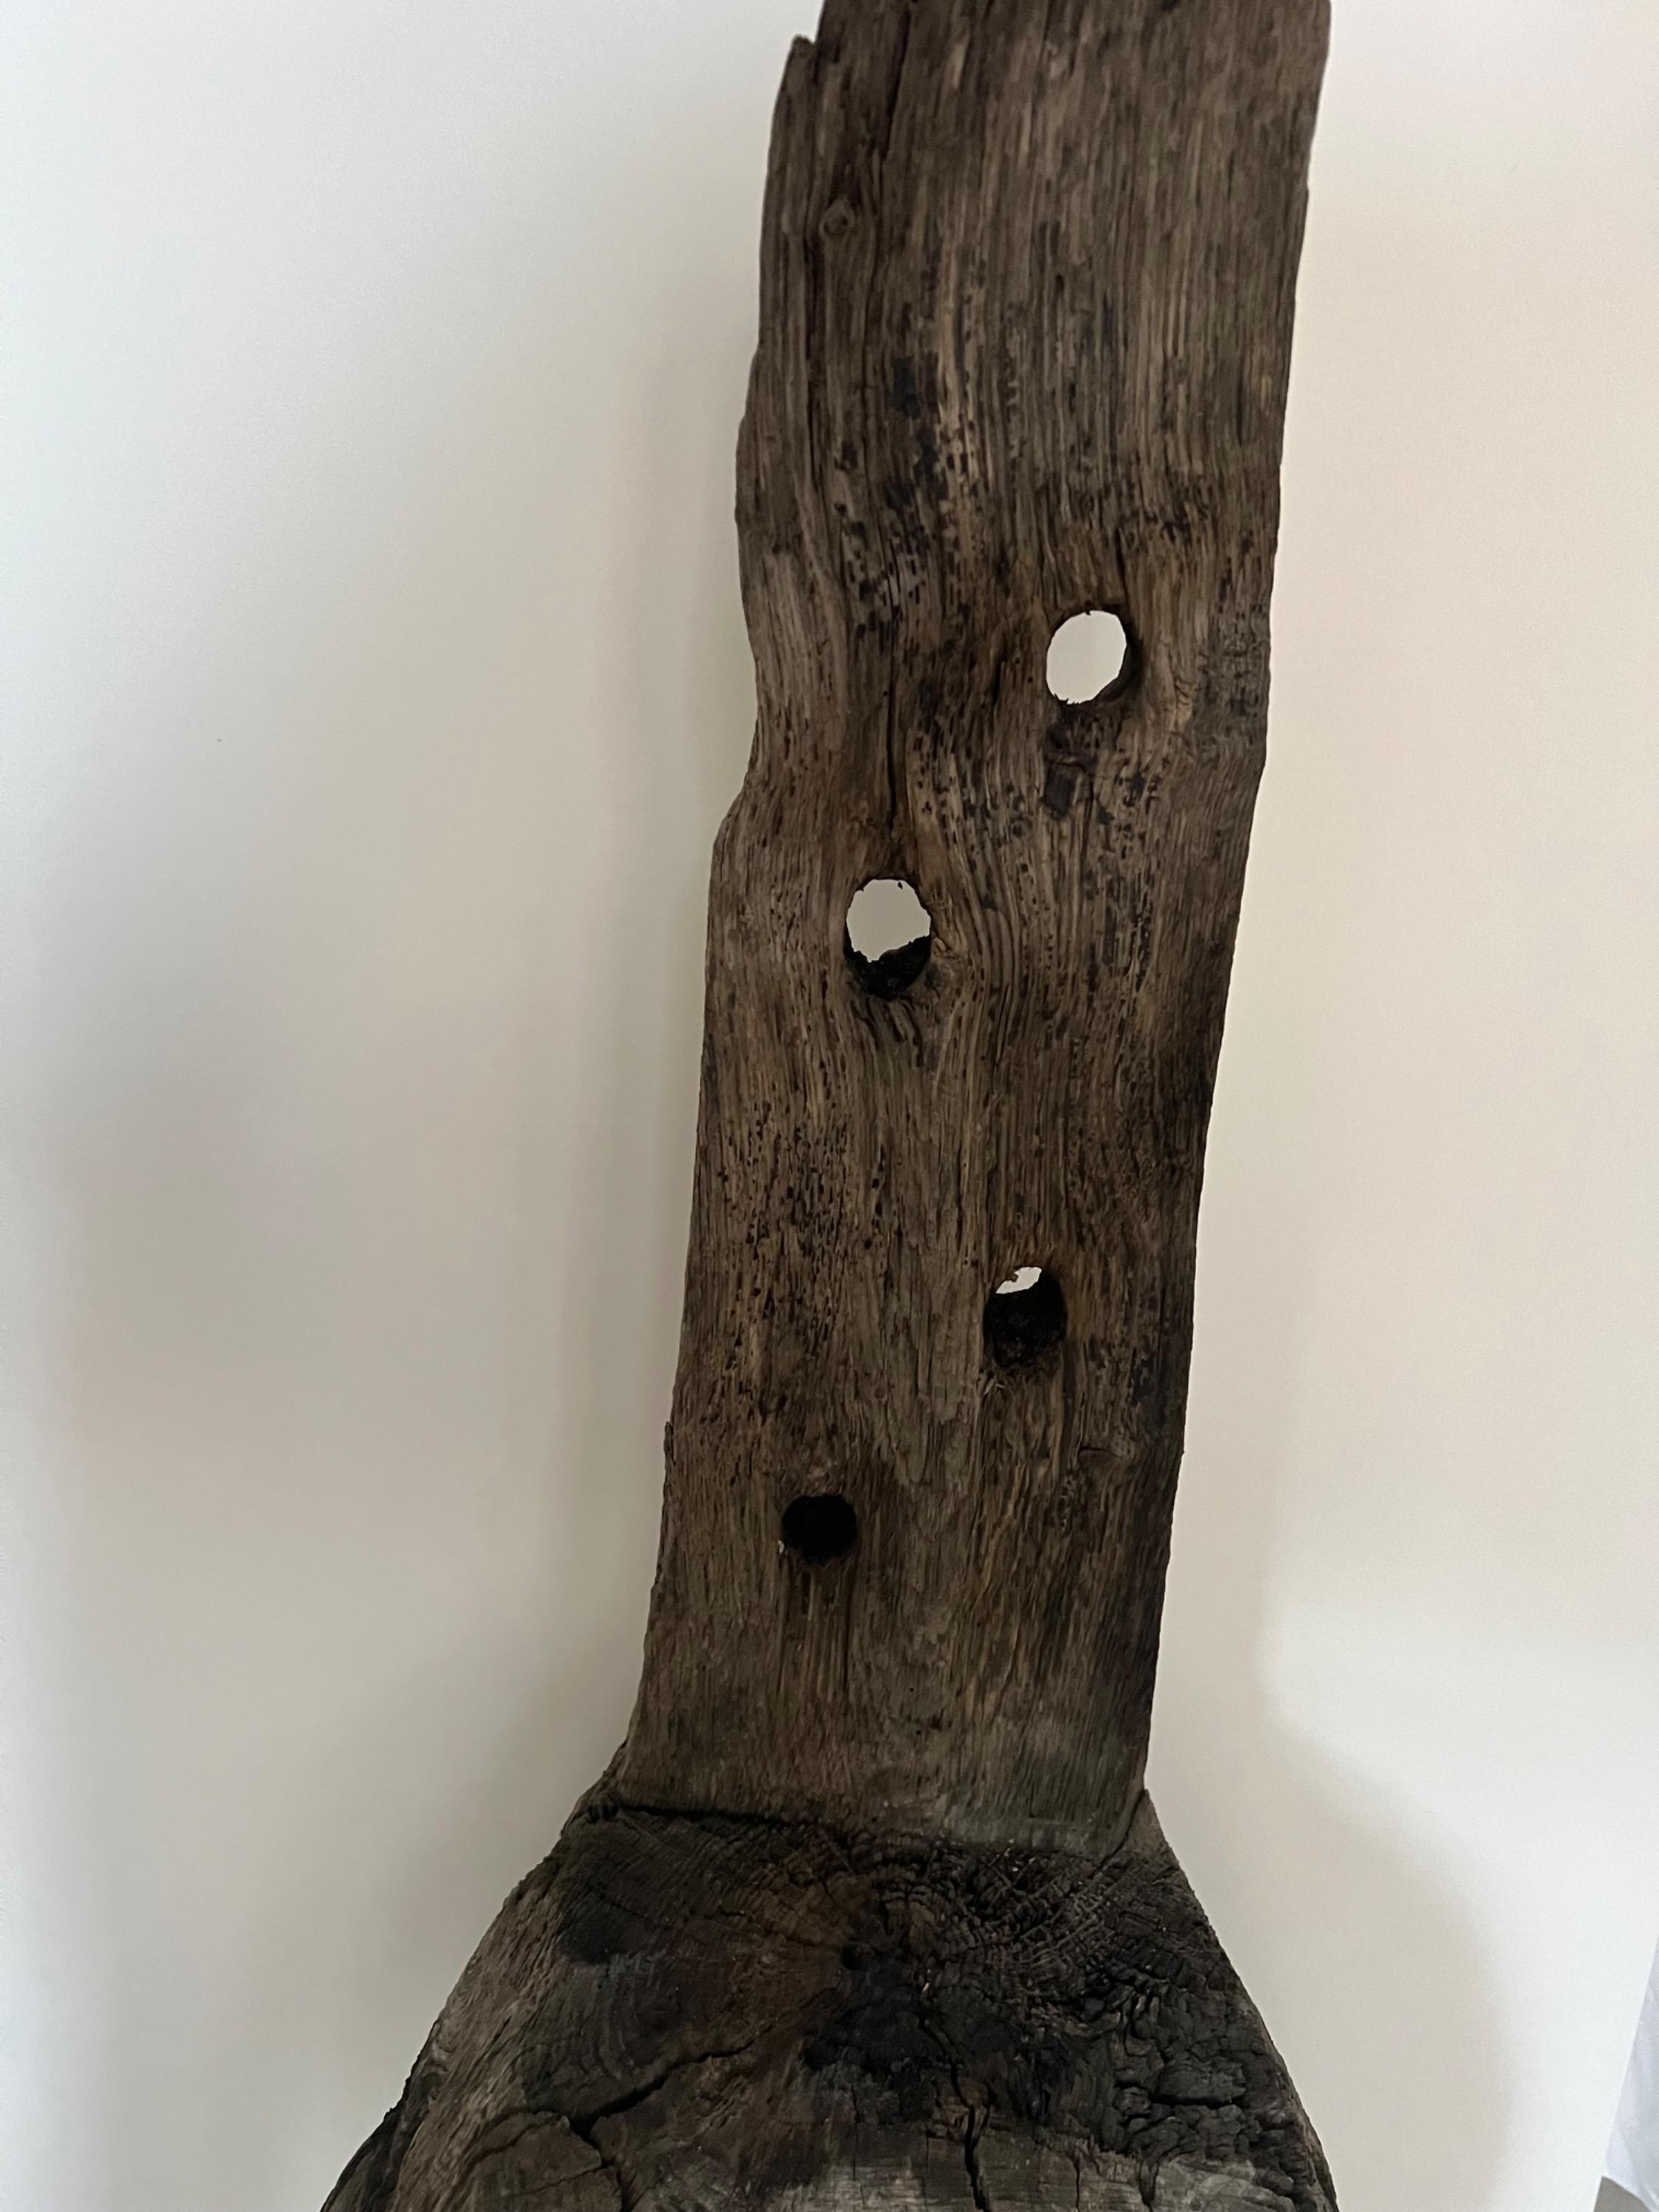 18th Century Big Oak Wooden Primitive Piece, Like a Seat or Sculpture. Dim = 110 x 32 x 32 cm